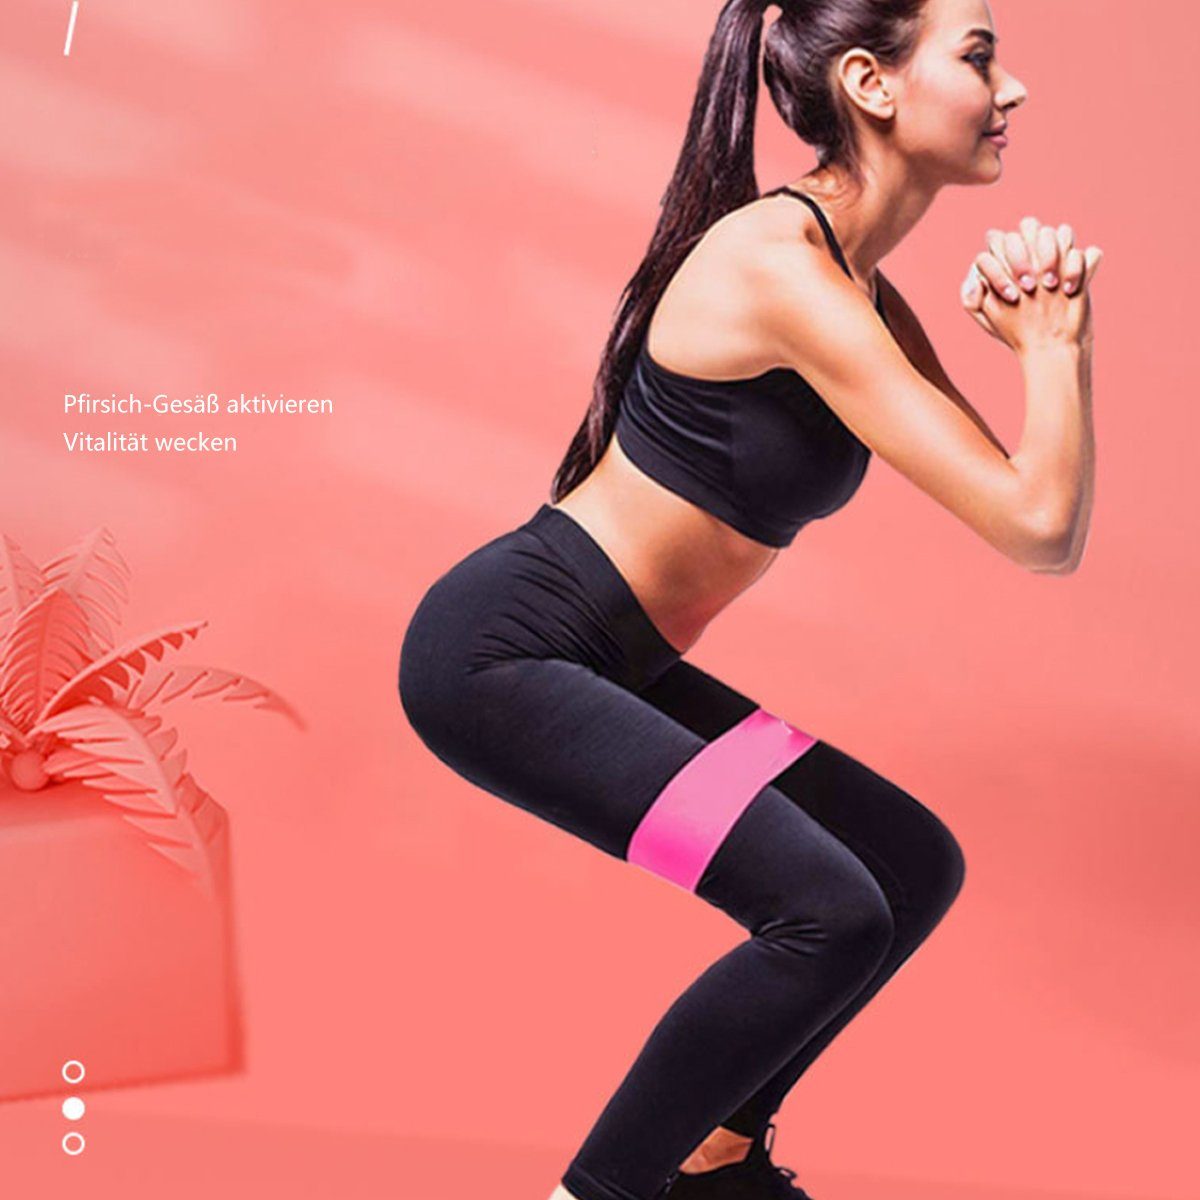 Jormftte Trainingsbänder Widerstandsbänder,Dehnungsband Gymnastikband für Mehrfarbig3 Yoga,Pilates,Gym